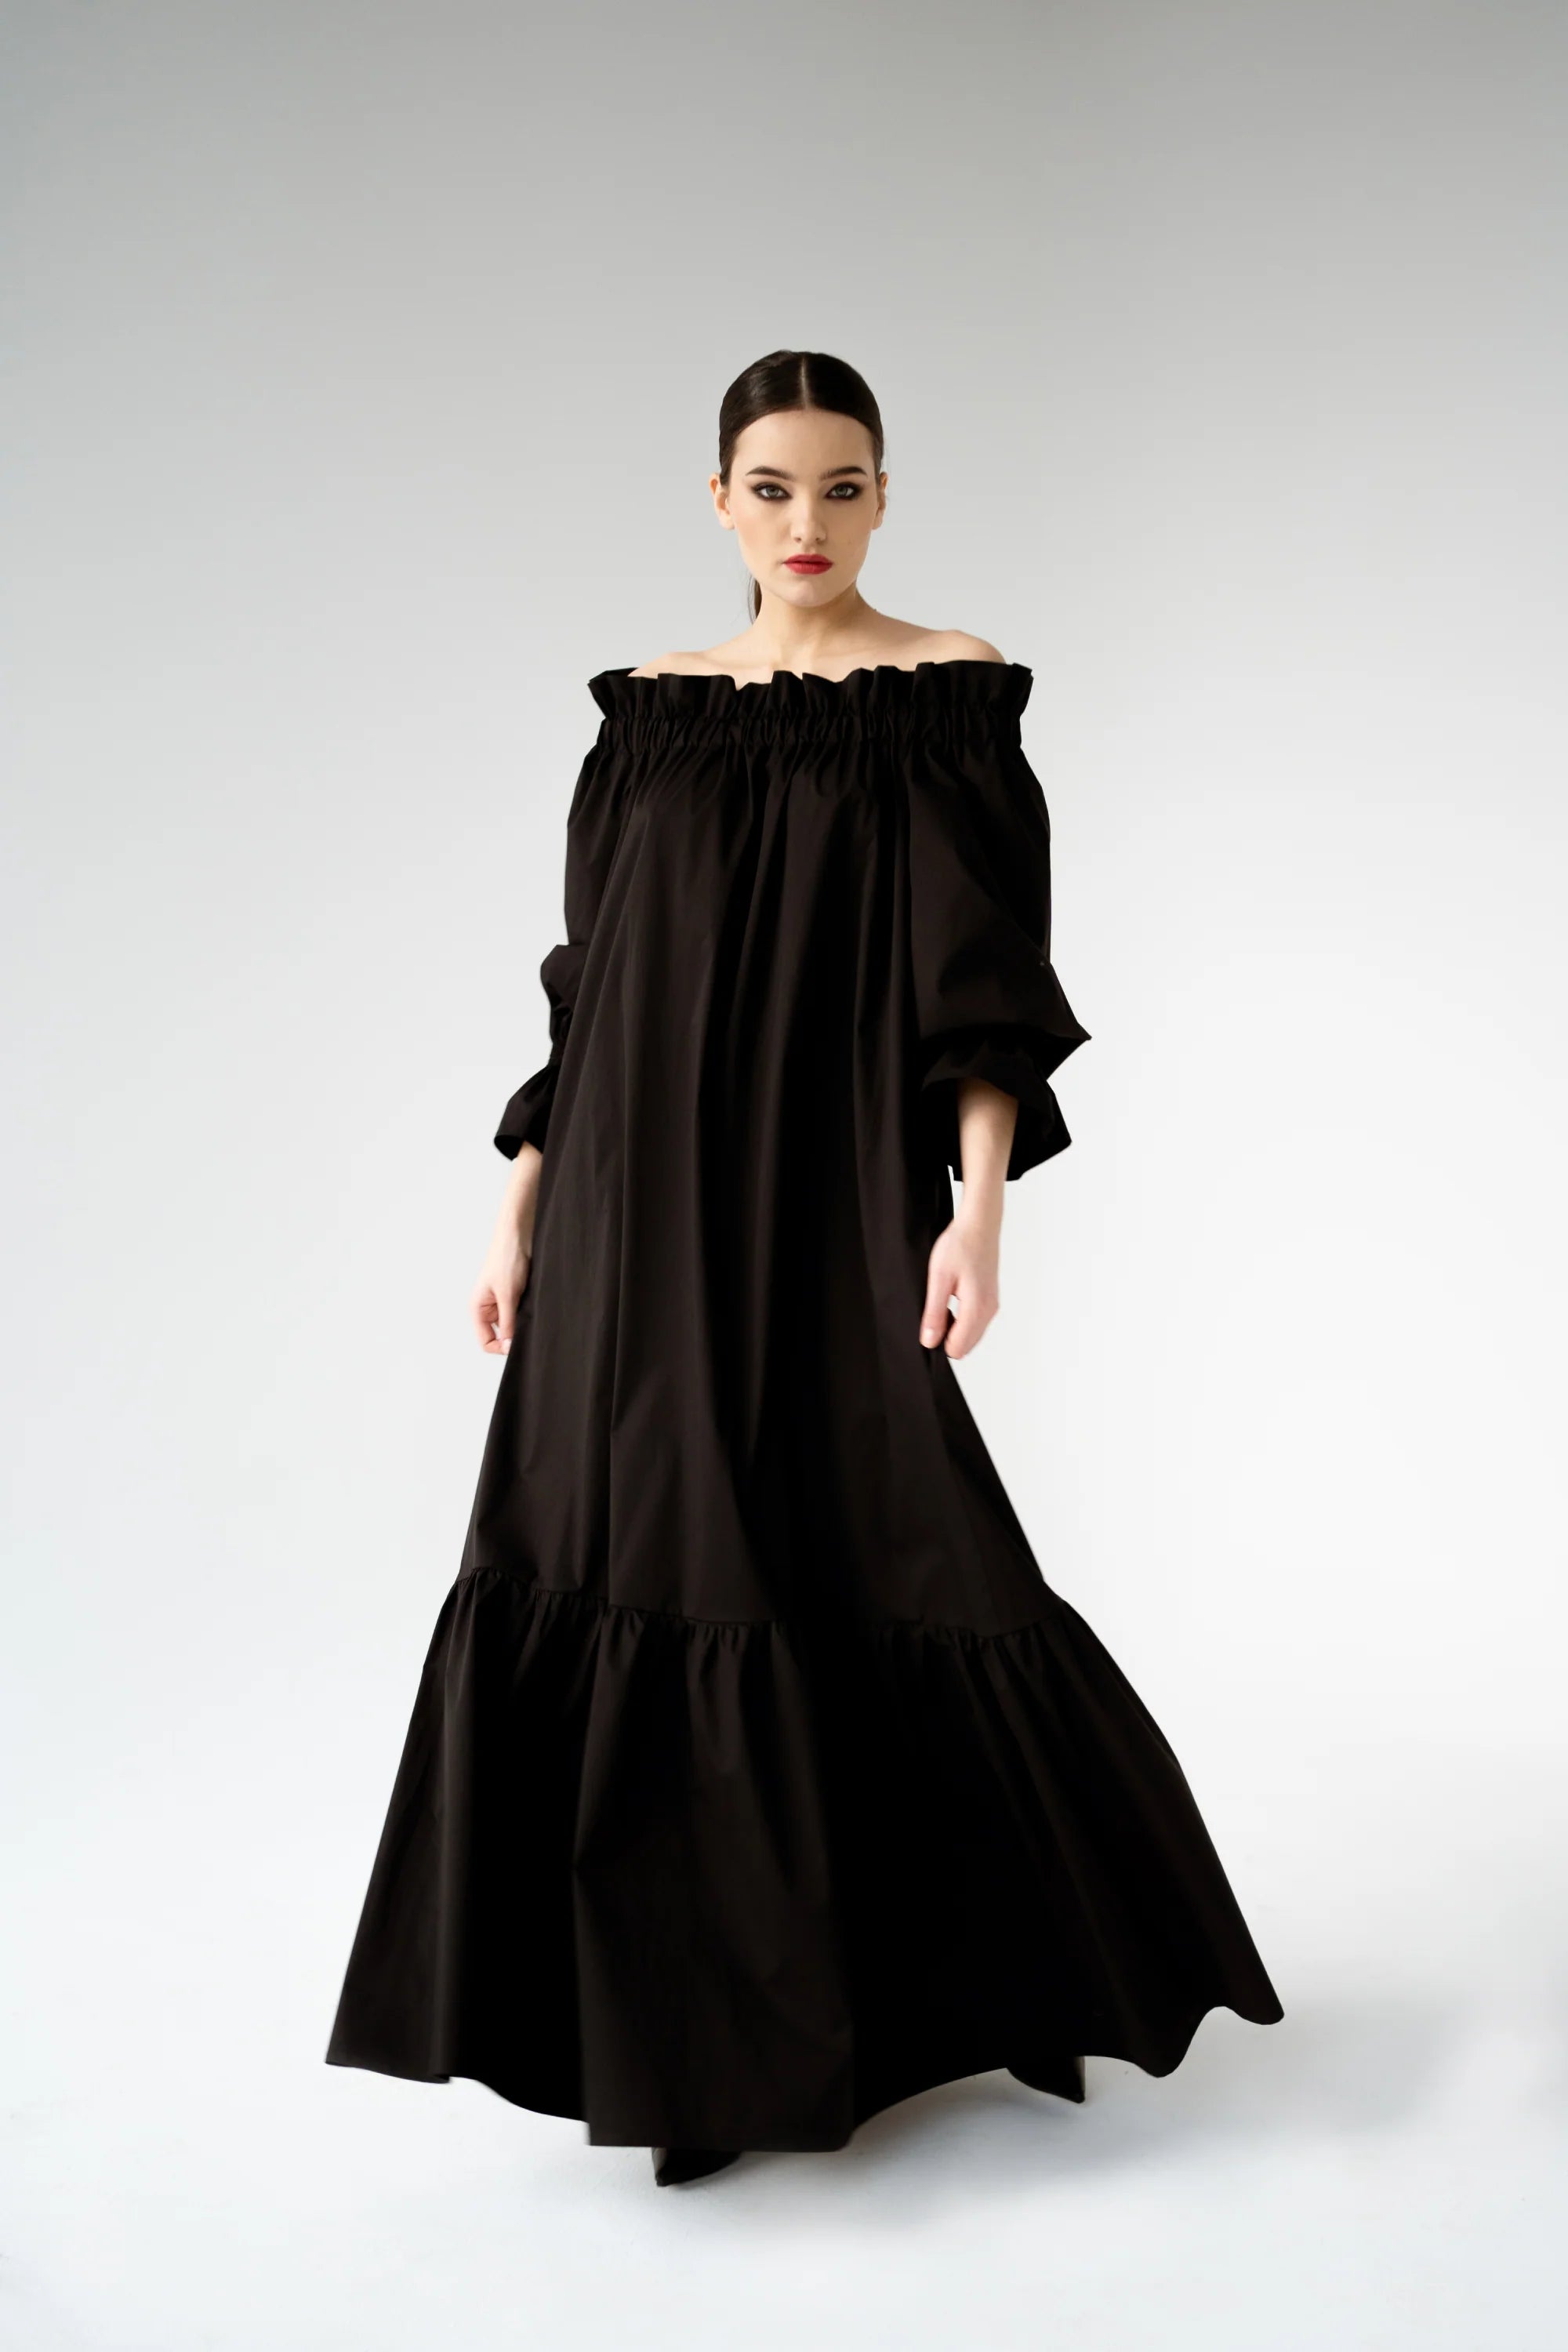 Esmeralda Dress by Monica Nera